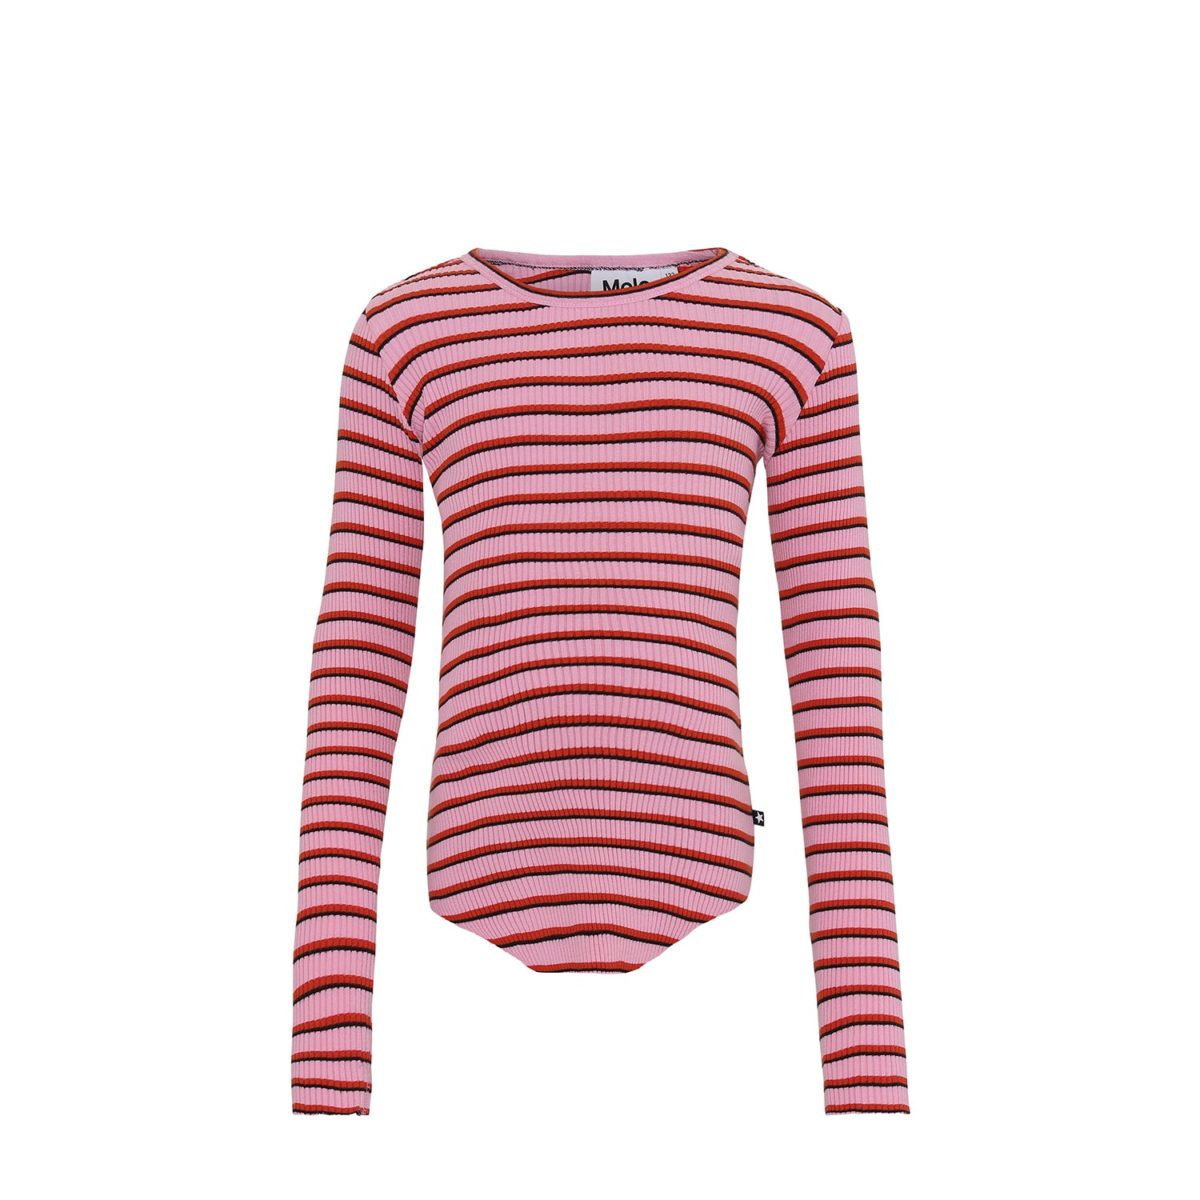 Molo - Bluse - Rochelle, pink red stripe